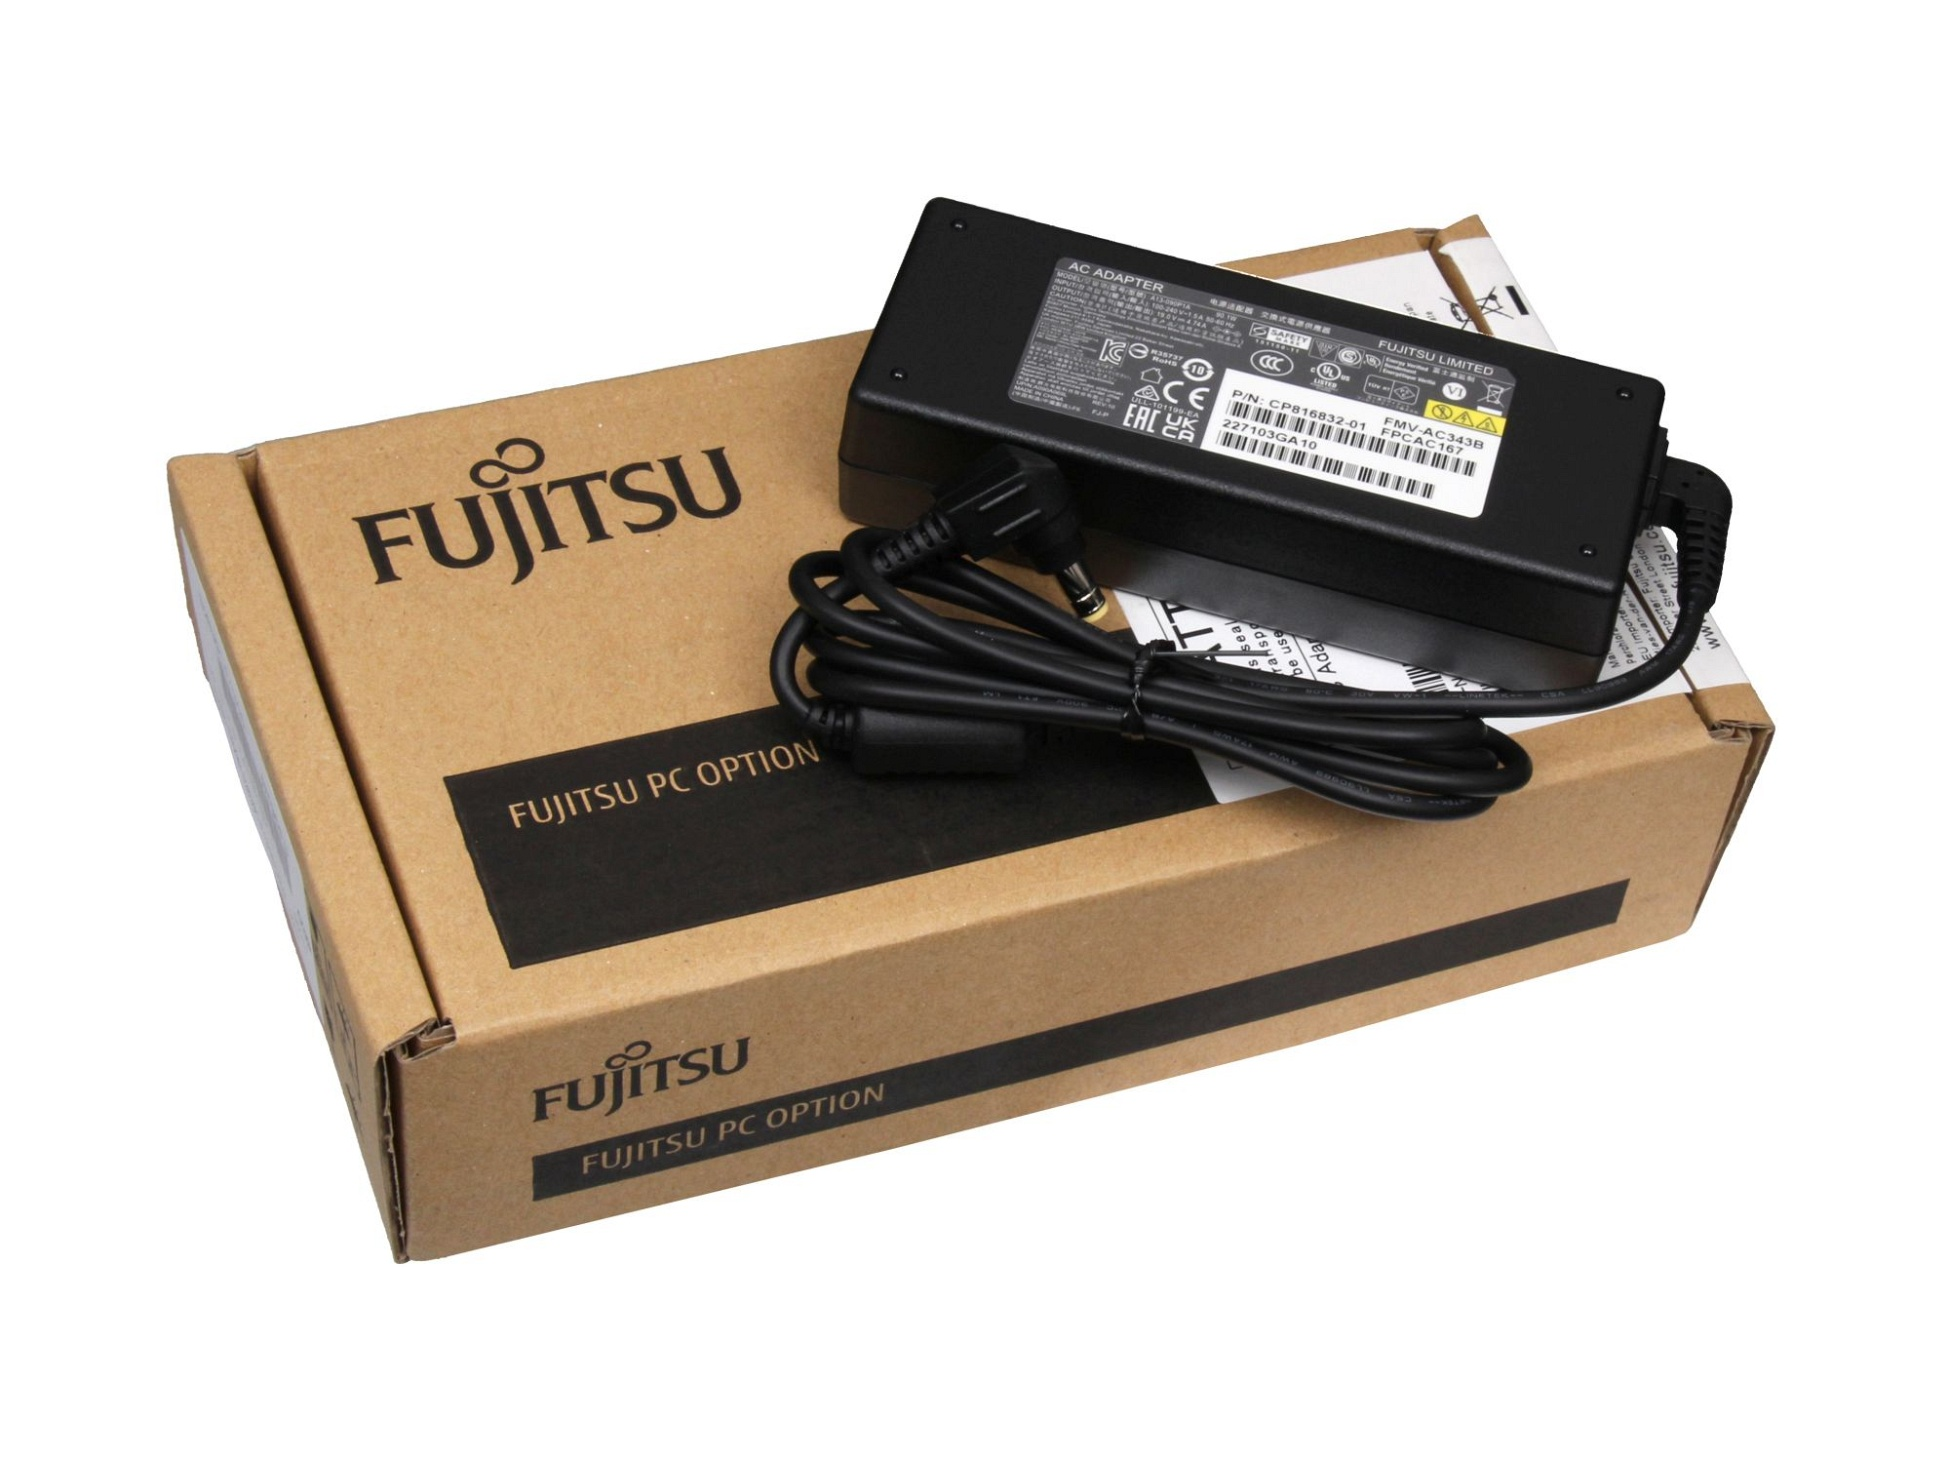 FUJITSU 10601772476 Original Watt 90 Netzteil